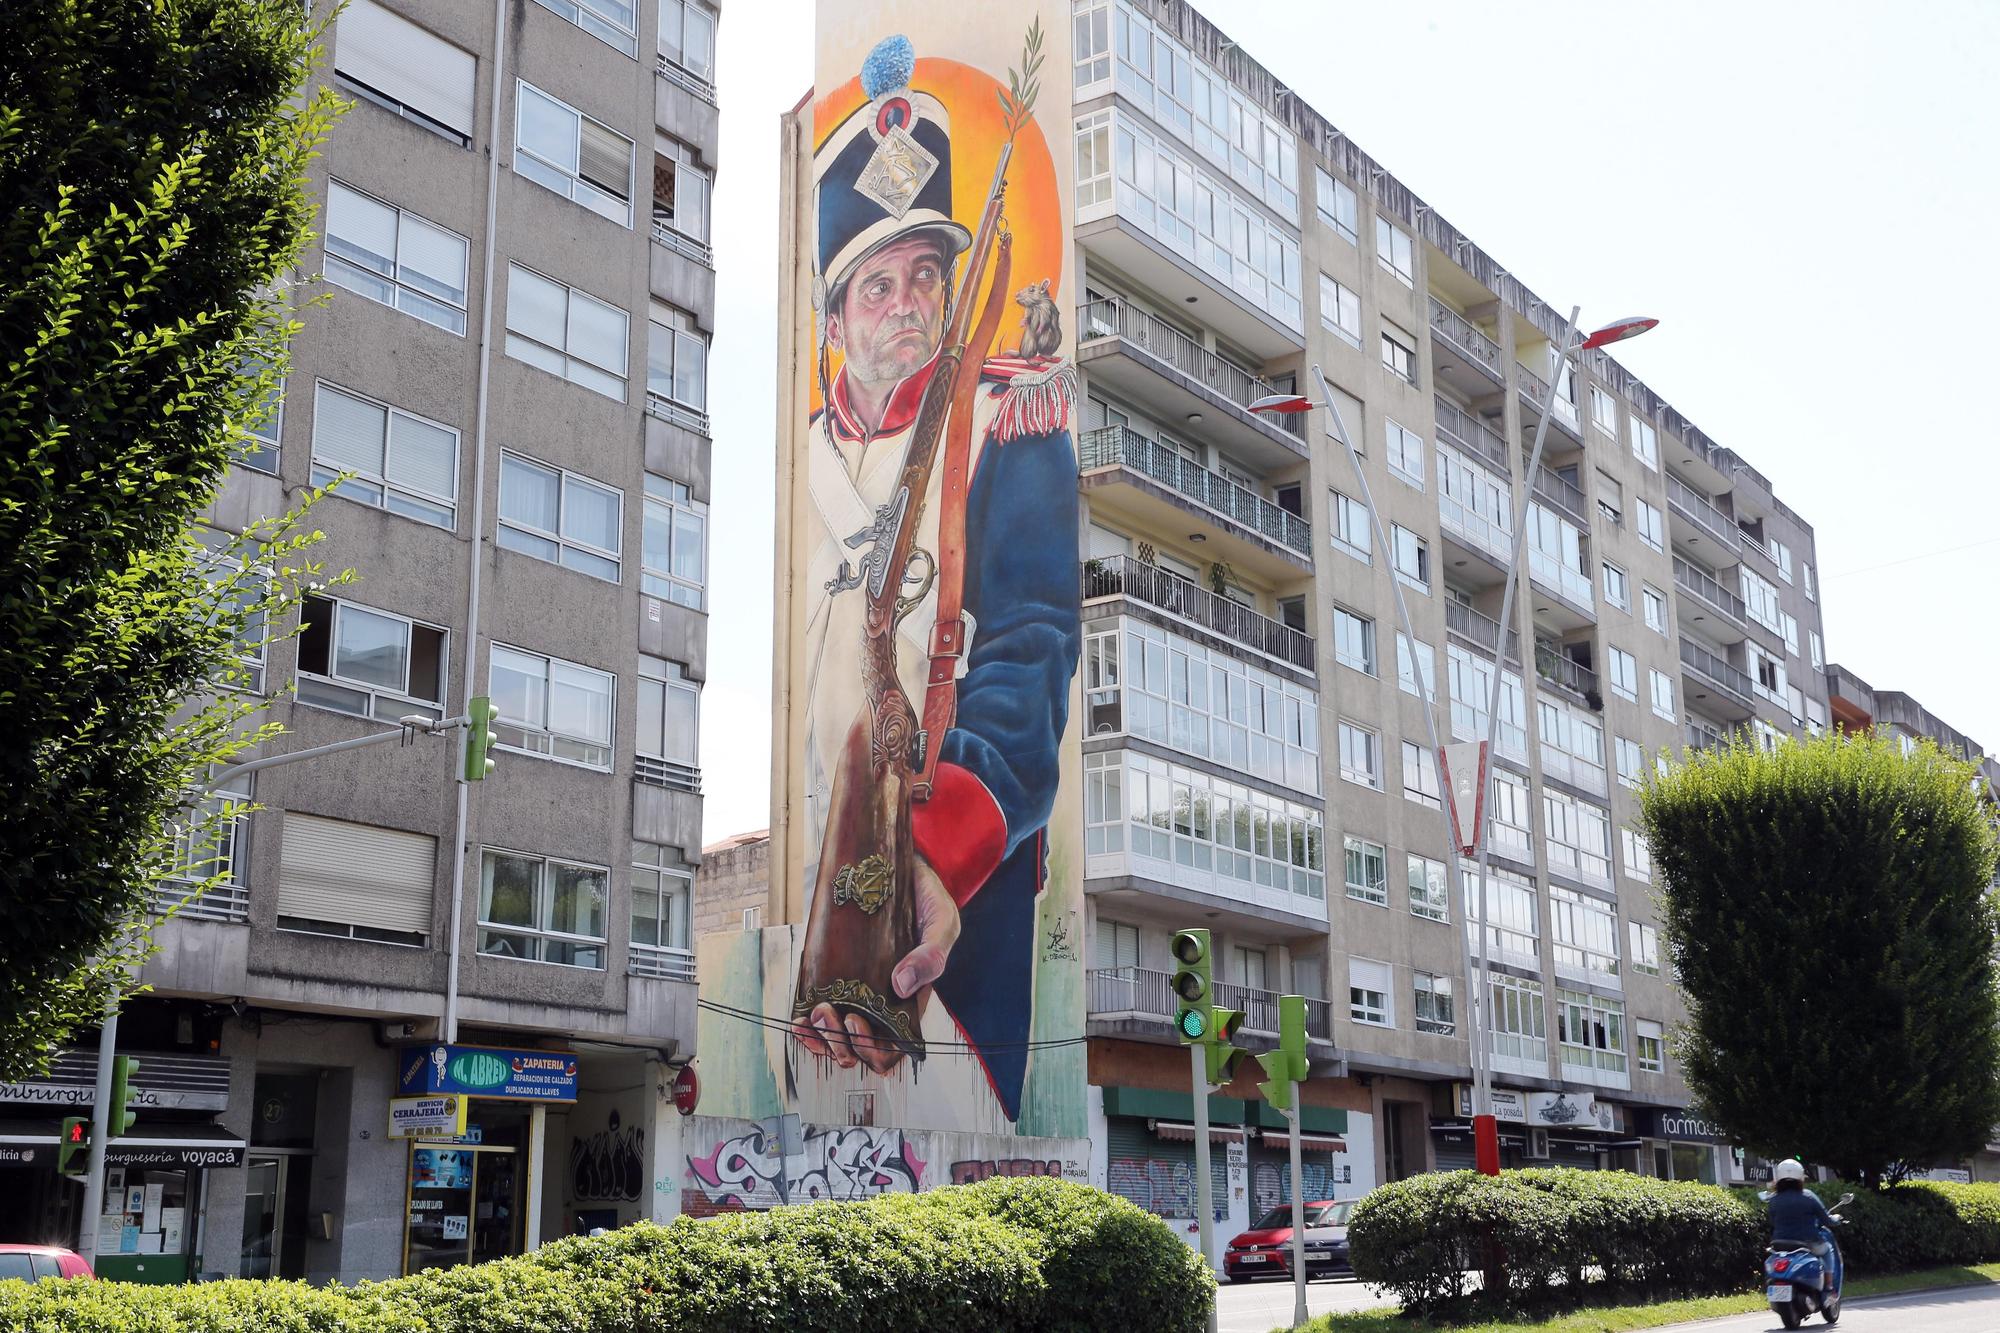 Vista general del mural en homenaje a los héroes de la Reconquista.